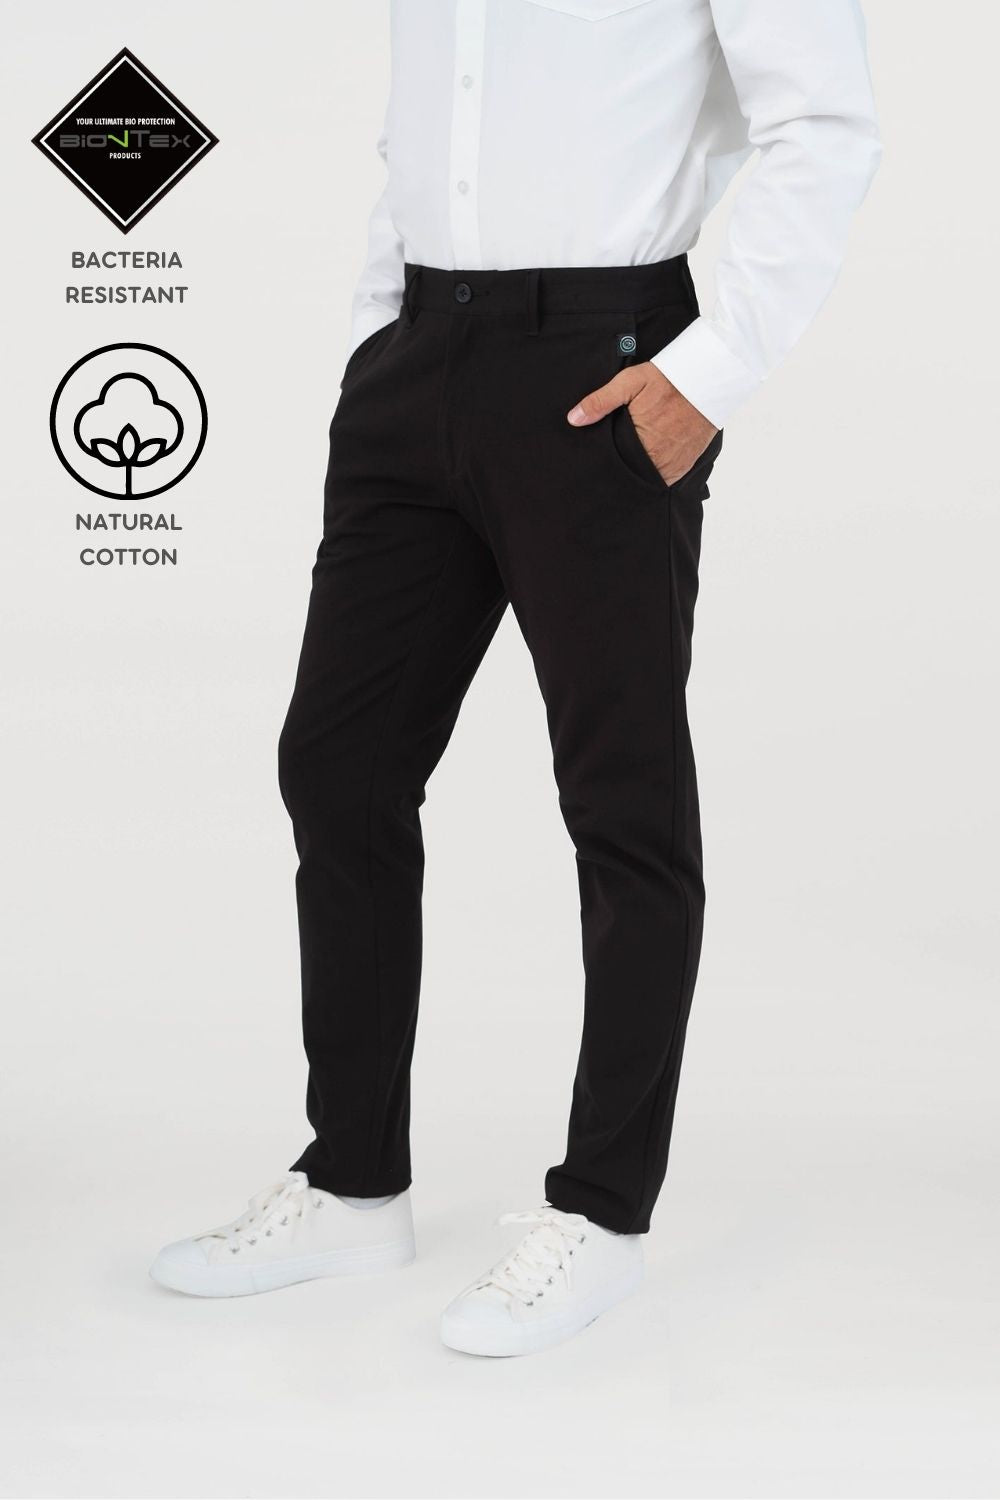 Men's BioNTex™ Flat Front Chino Pants